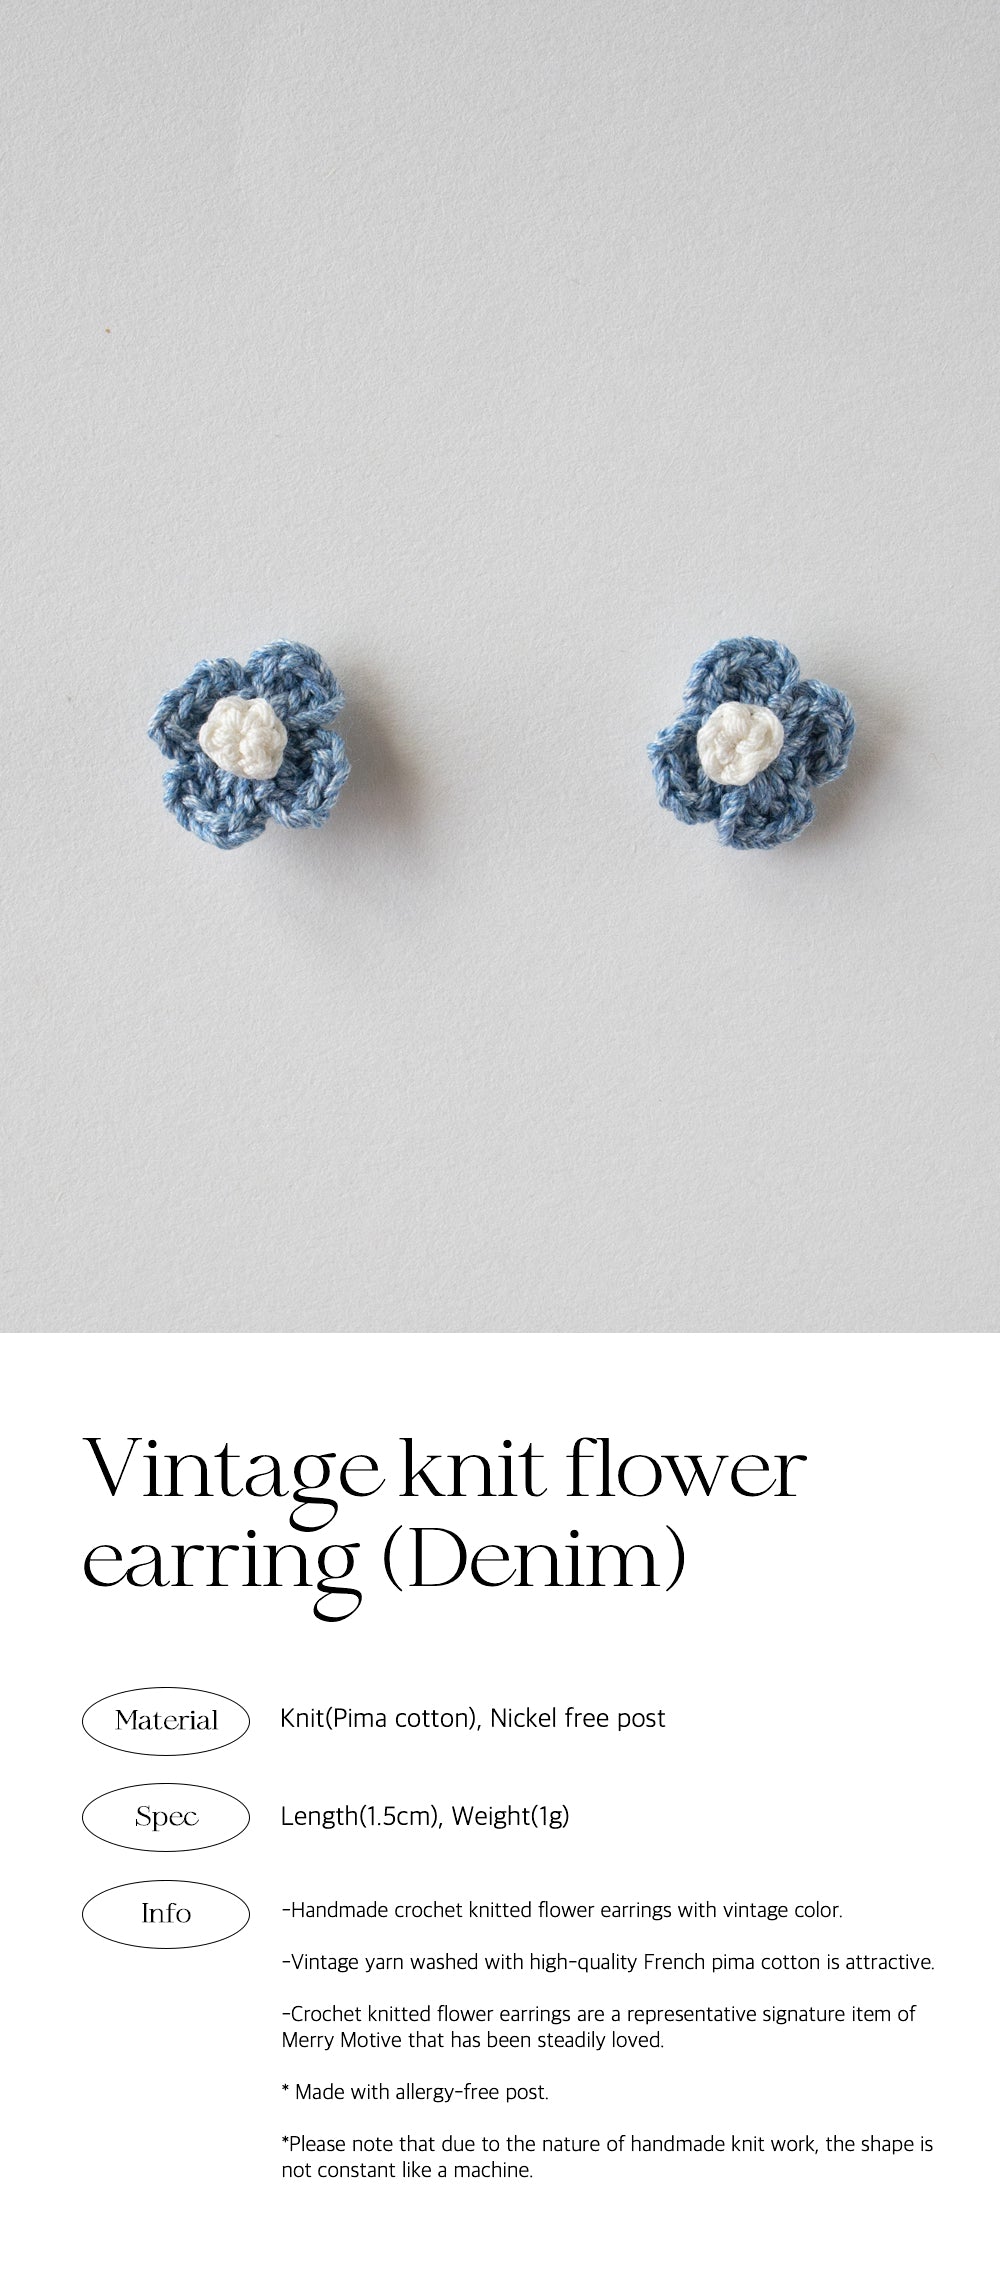 Vintage knit flower earring (Denim)